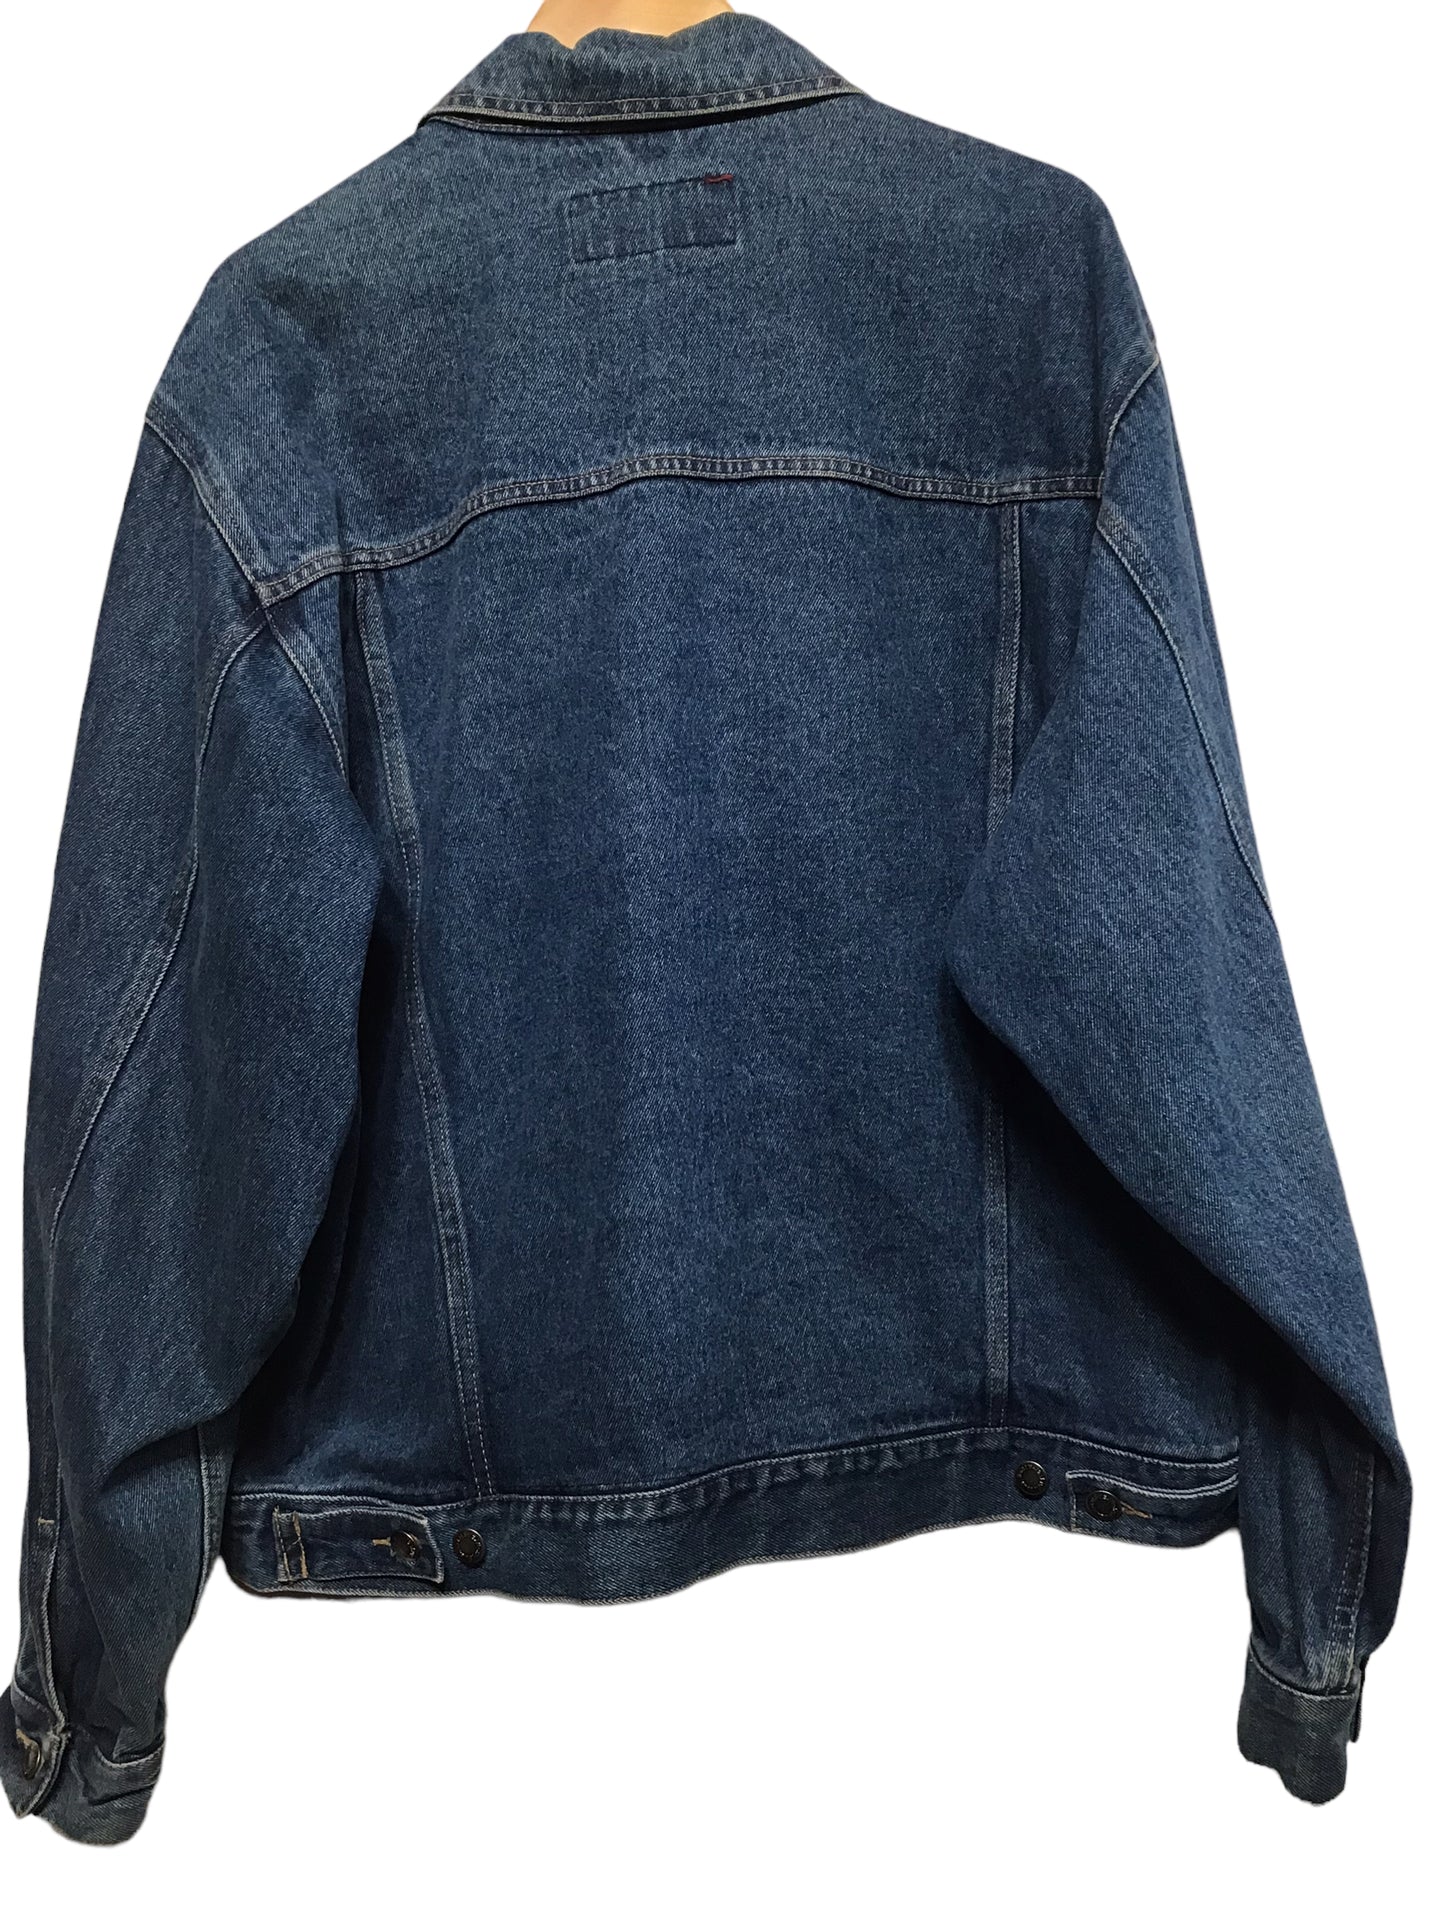 Wrangler Denim Jacket (XL)